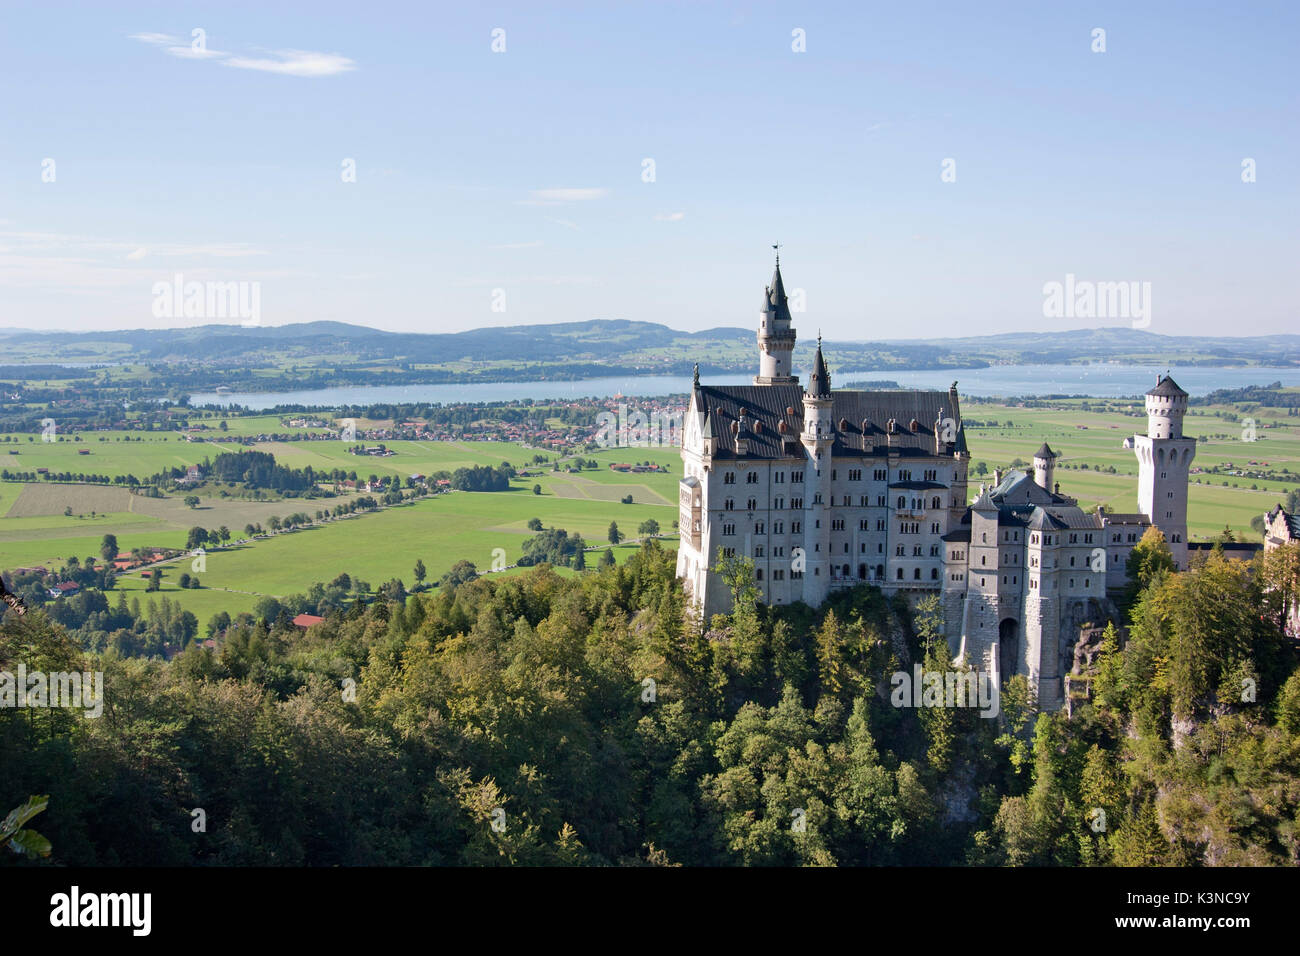 Panoramic view of the castle Neuschwanstein, Germany Stock Photo